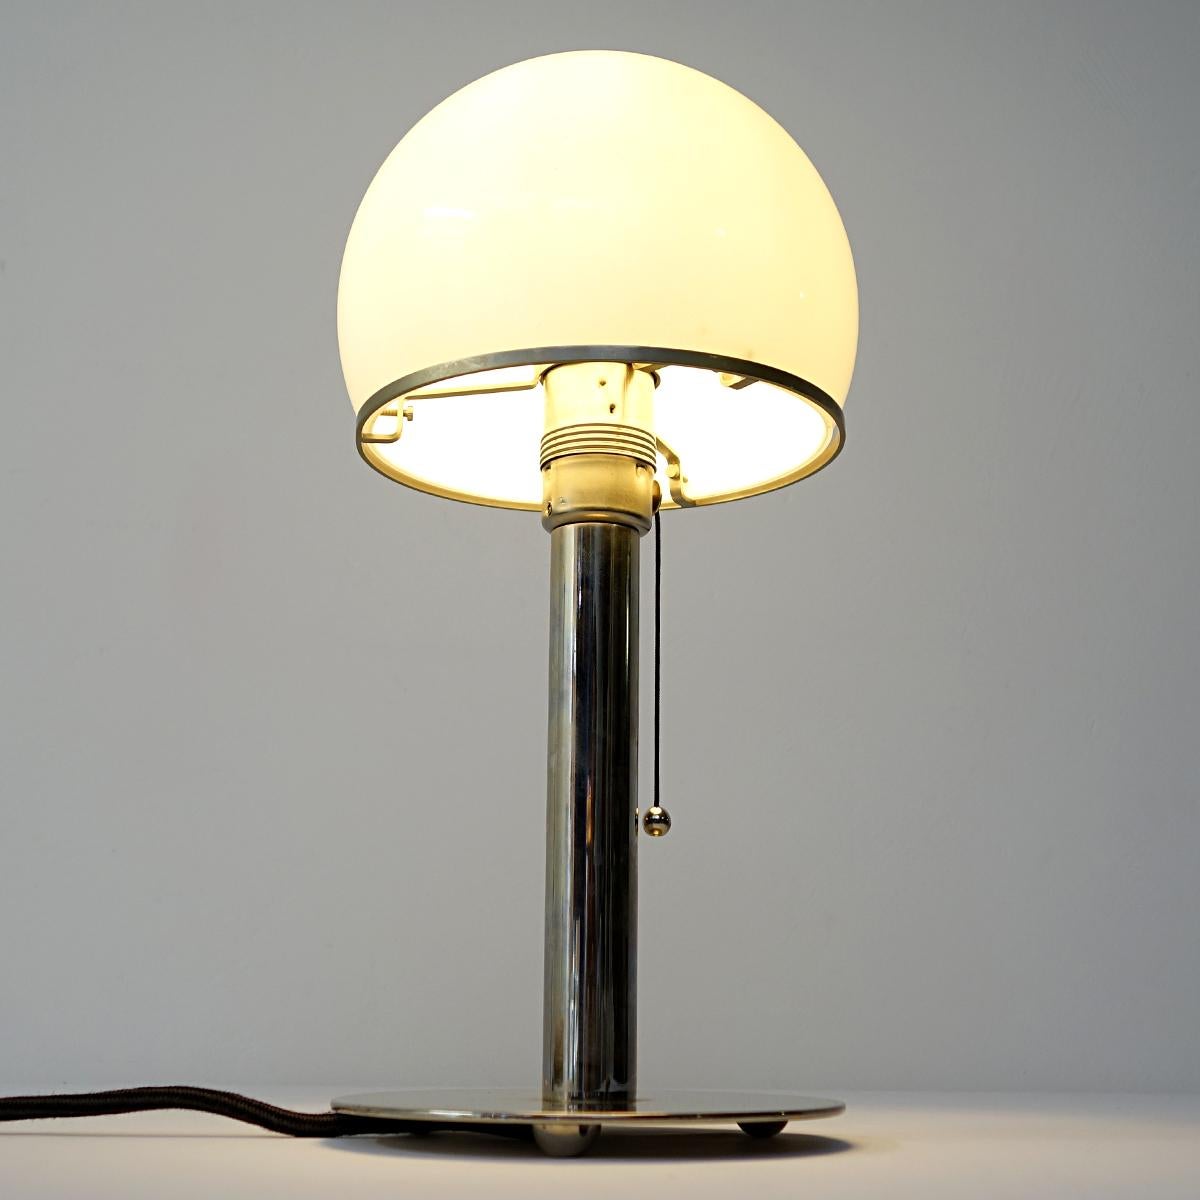 Bauhaus Wa 24 Table Lamp Designed by Wilhelm Wagenfeld for Tecnolumen 1